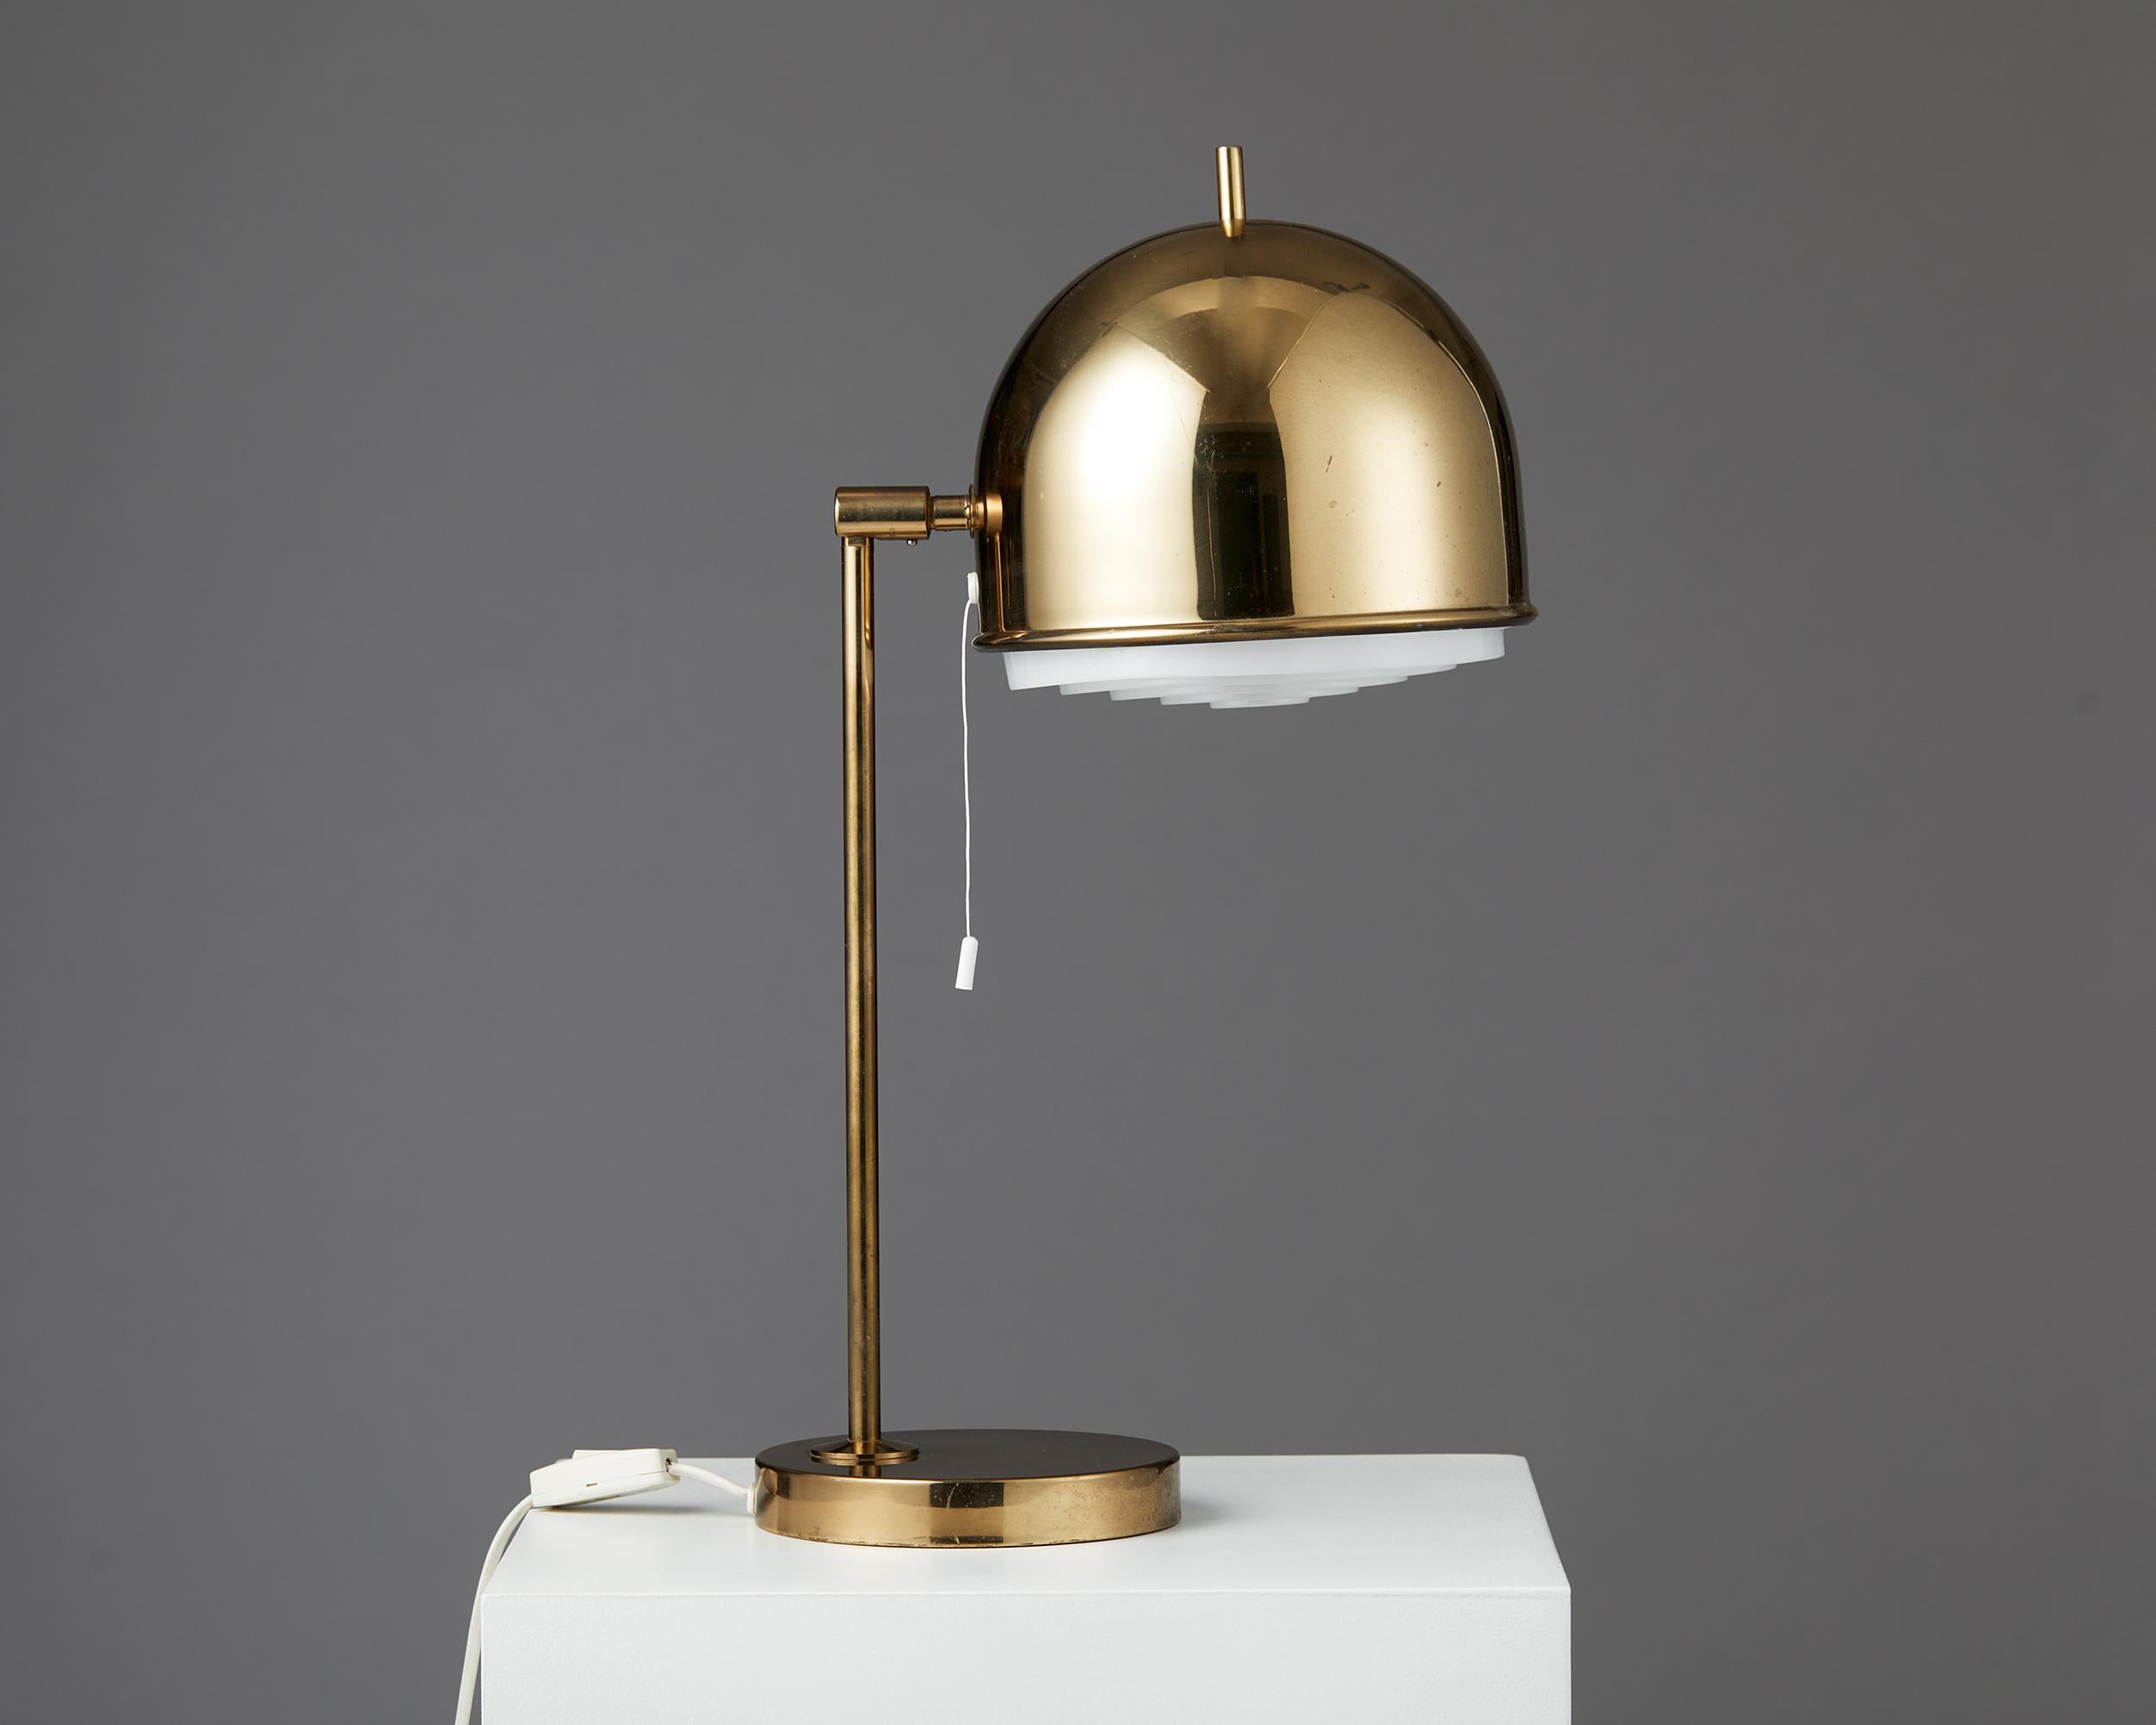 Table lamp B-075 designed by Eje Ahlgren for Bergboms,
Sweden, 1960s.

Polished brass.

Stamped ‘Bergbom B-075’.

Measurements: 
H: 57 cm / 1' 10 1/2